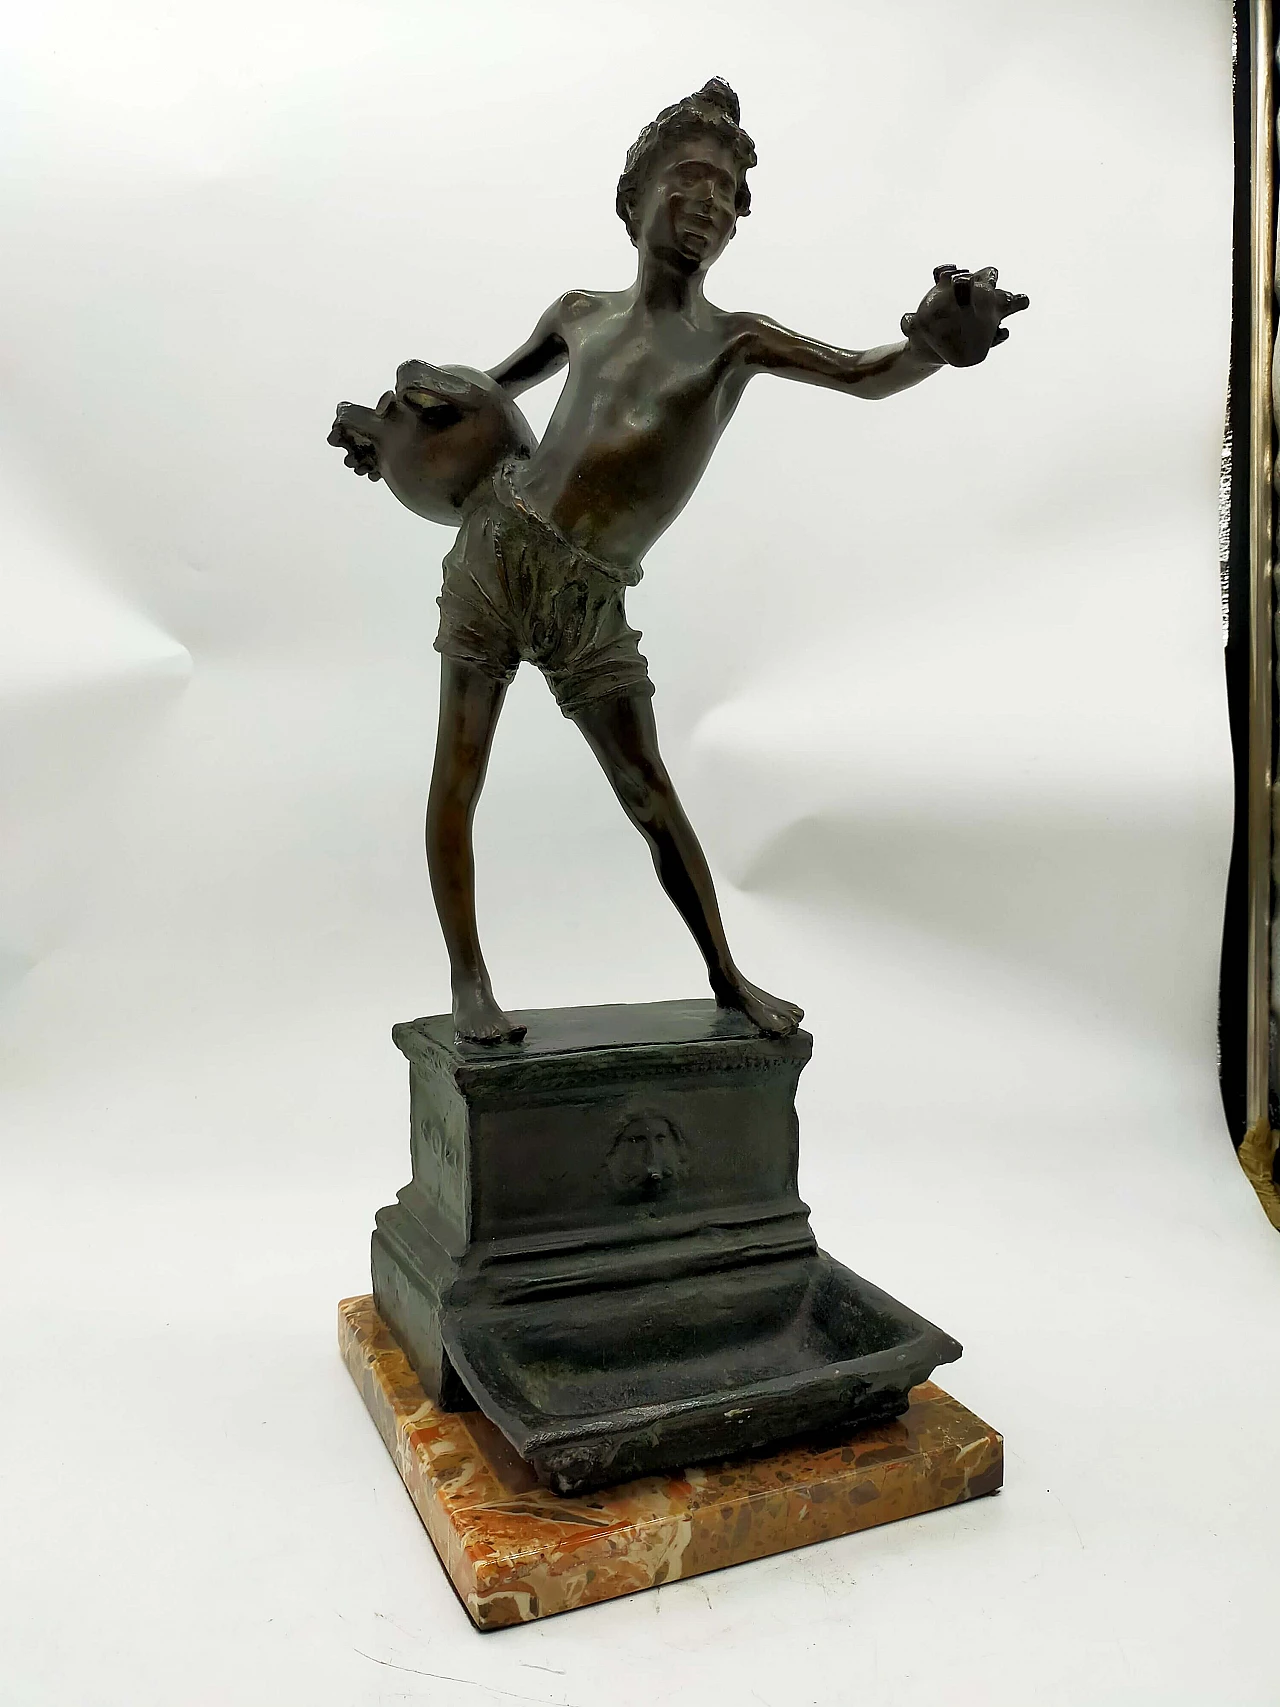 Vincenzo Gemito, The Waterman, bronze sculpture, late 19th century 1